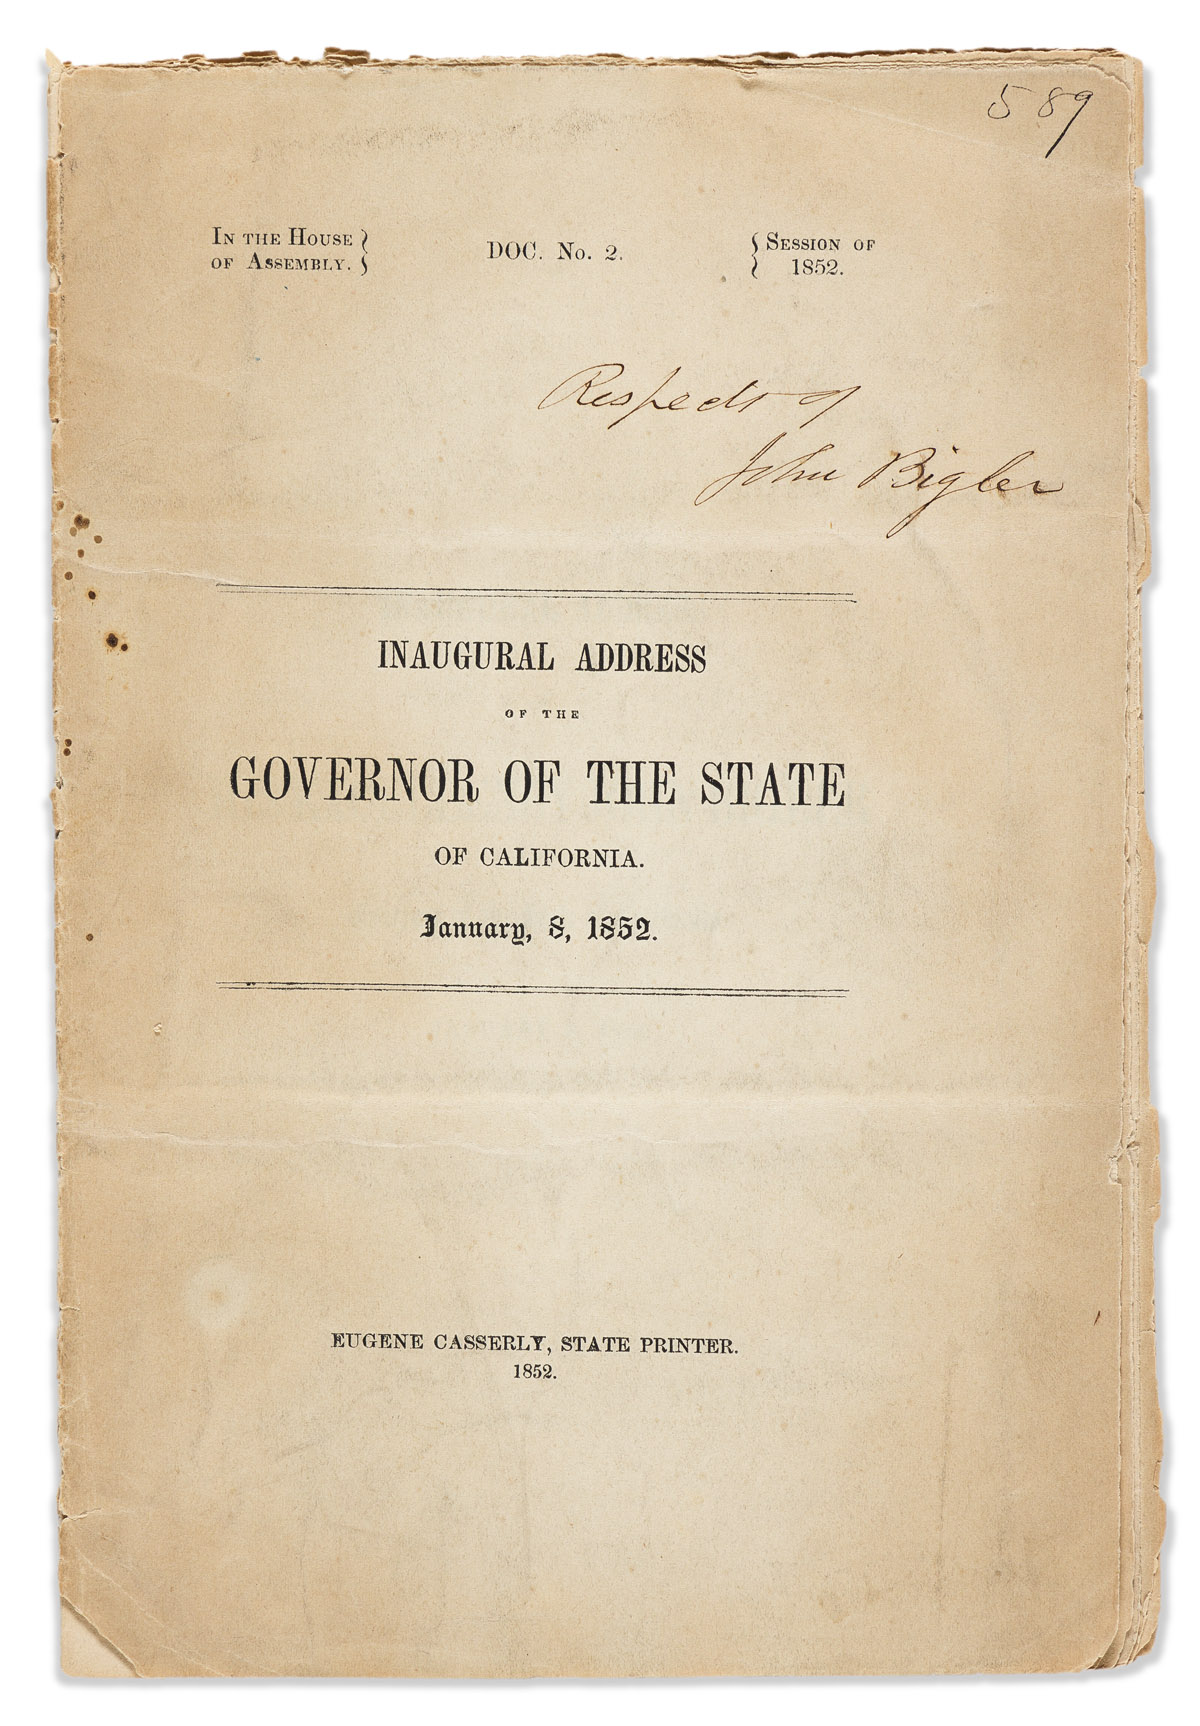 (CALIFORNIA.) John Bigler. Inaugural Address of the Governor of the State of California, January 8, 1852.